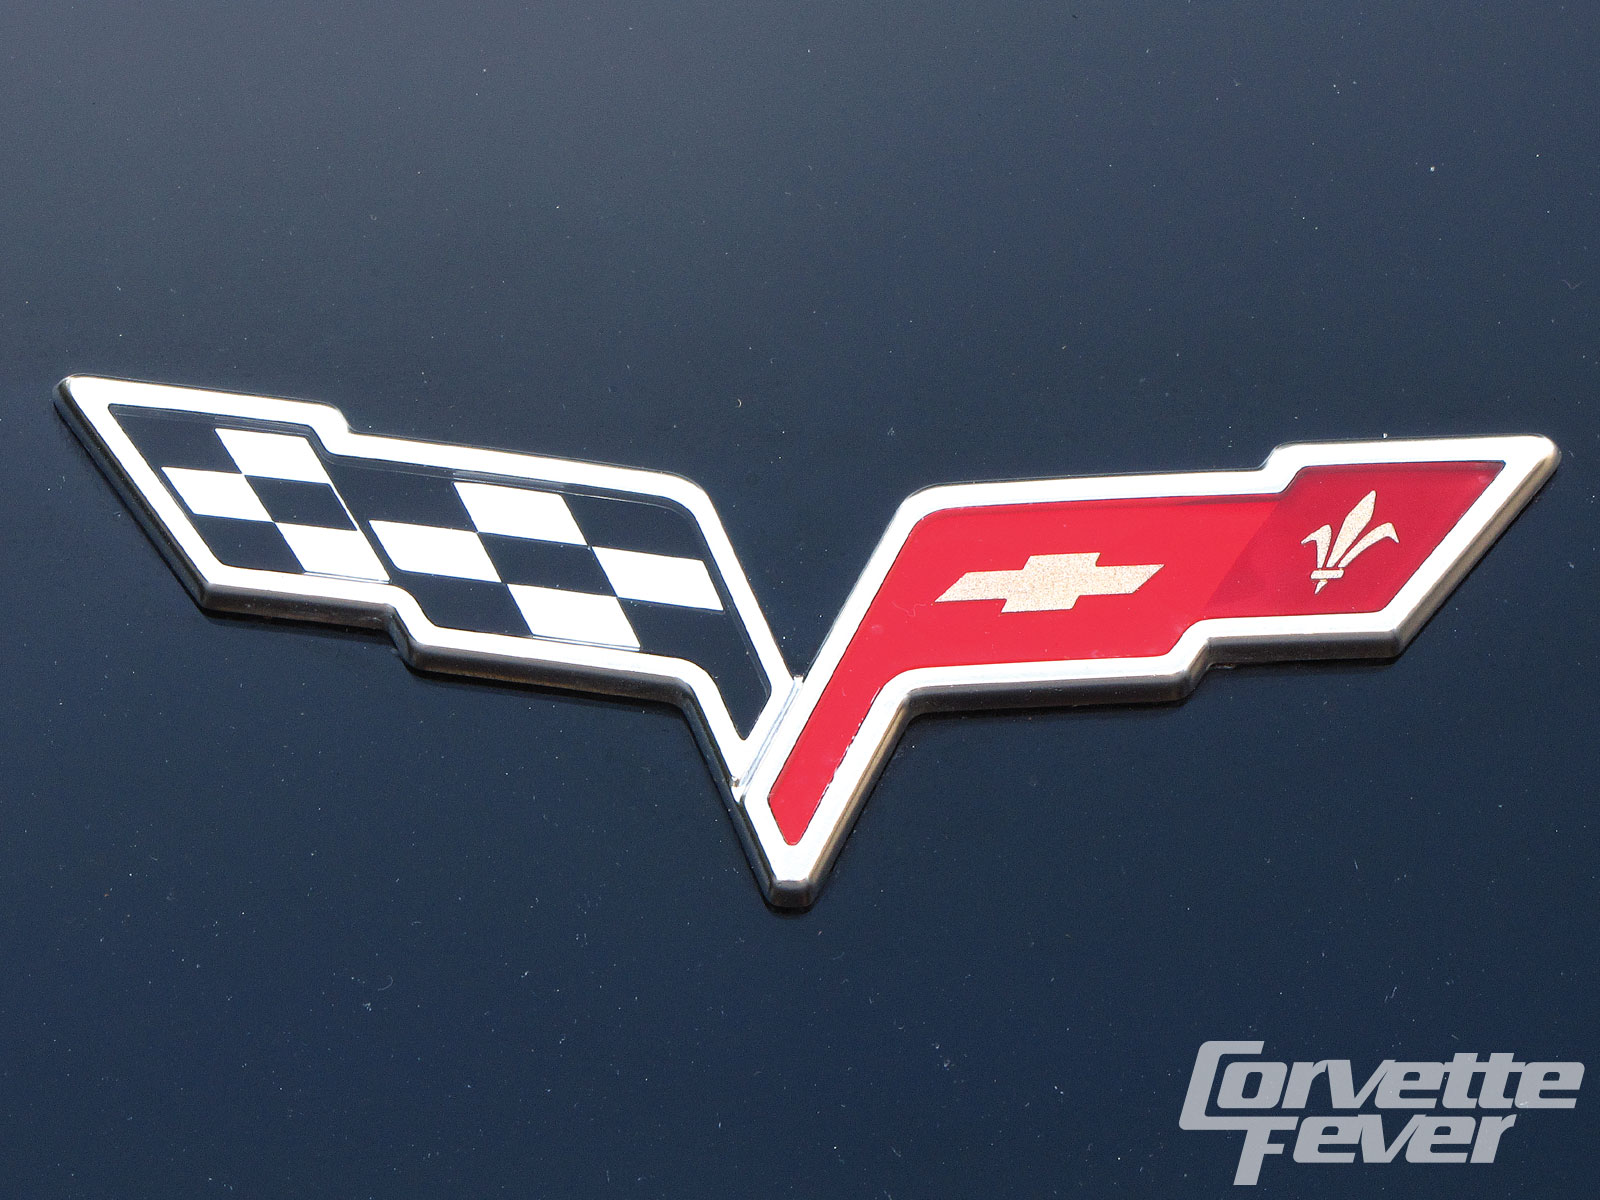 Chevy Corvette Logo